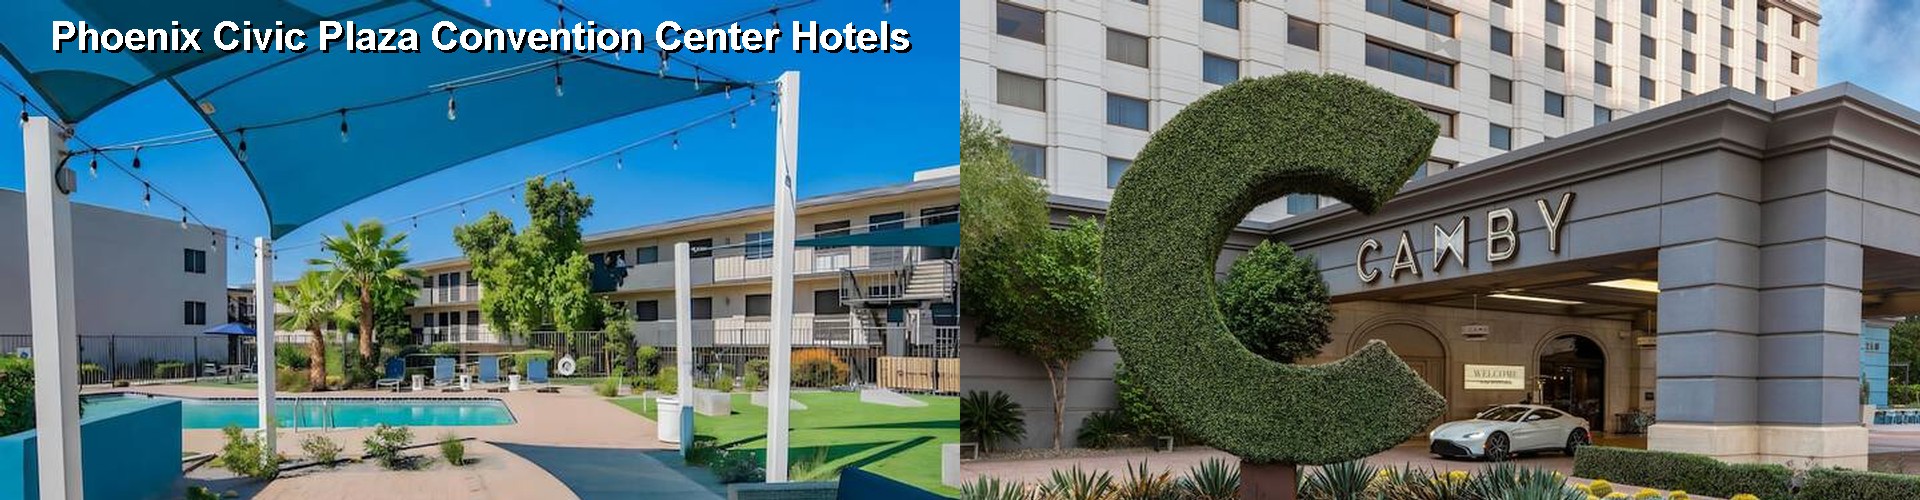 5 Best Hotels near Phoenix Civic Plaza Convention Center